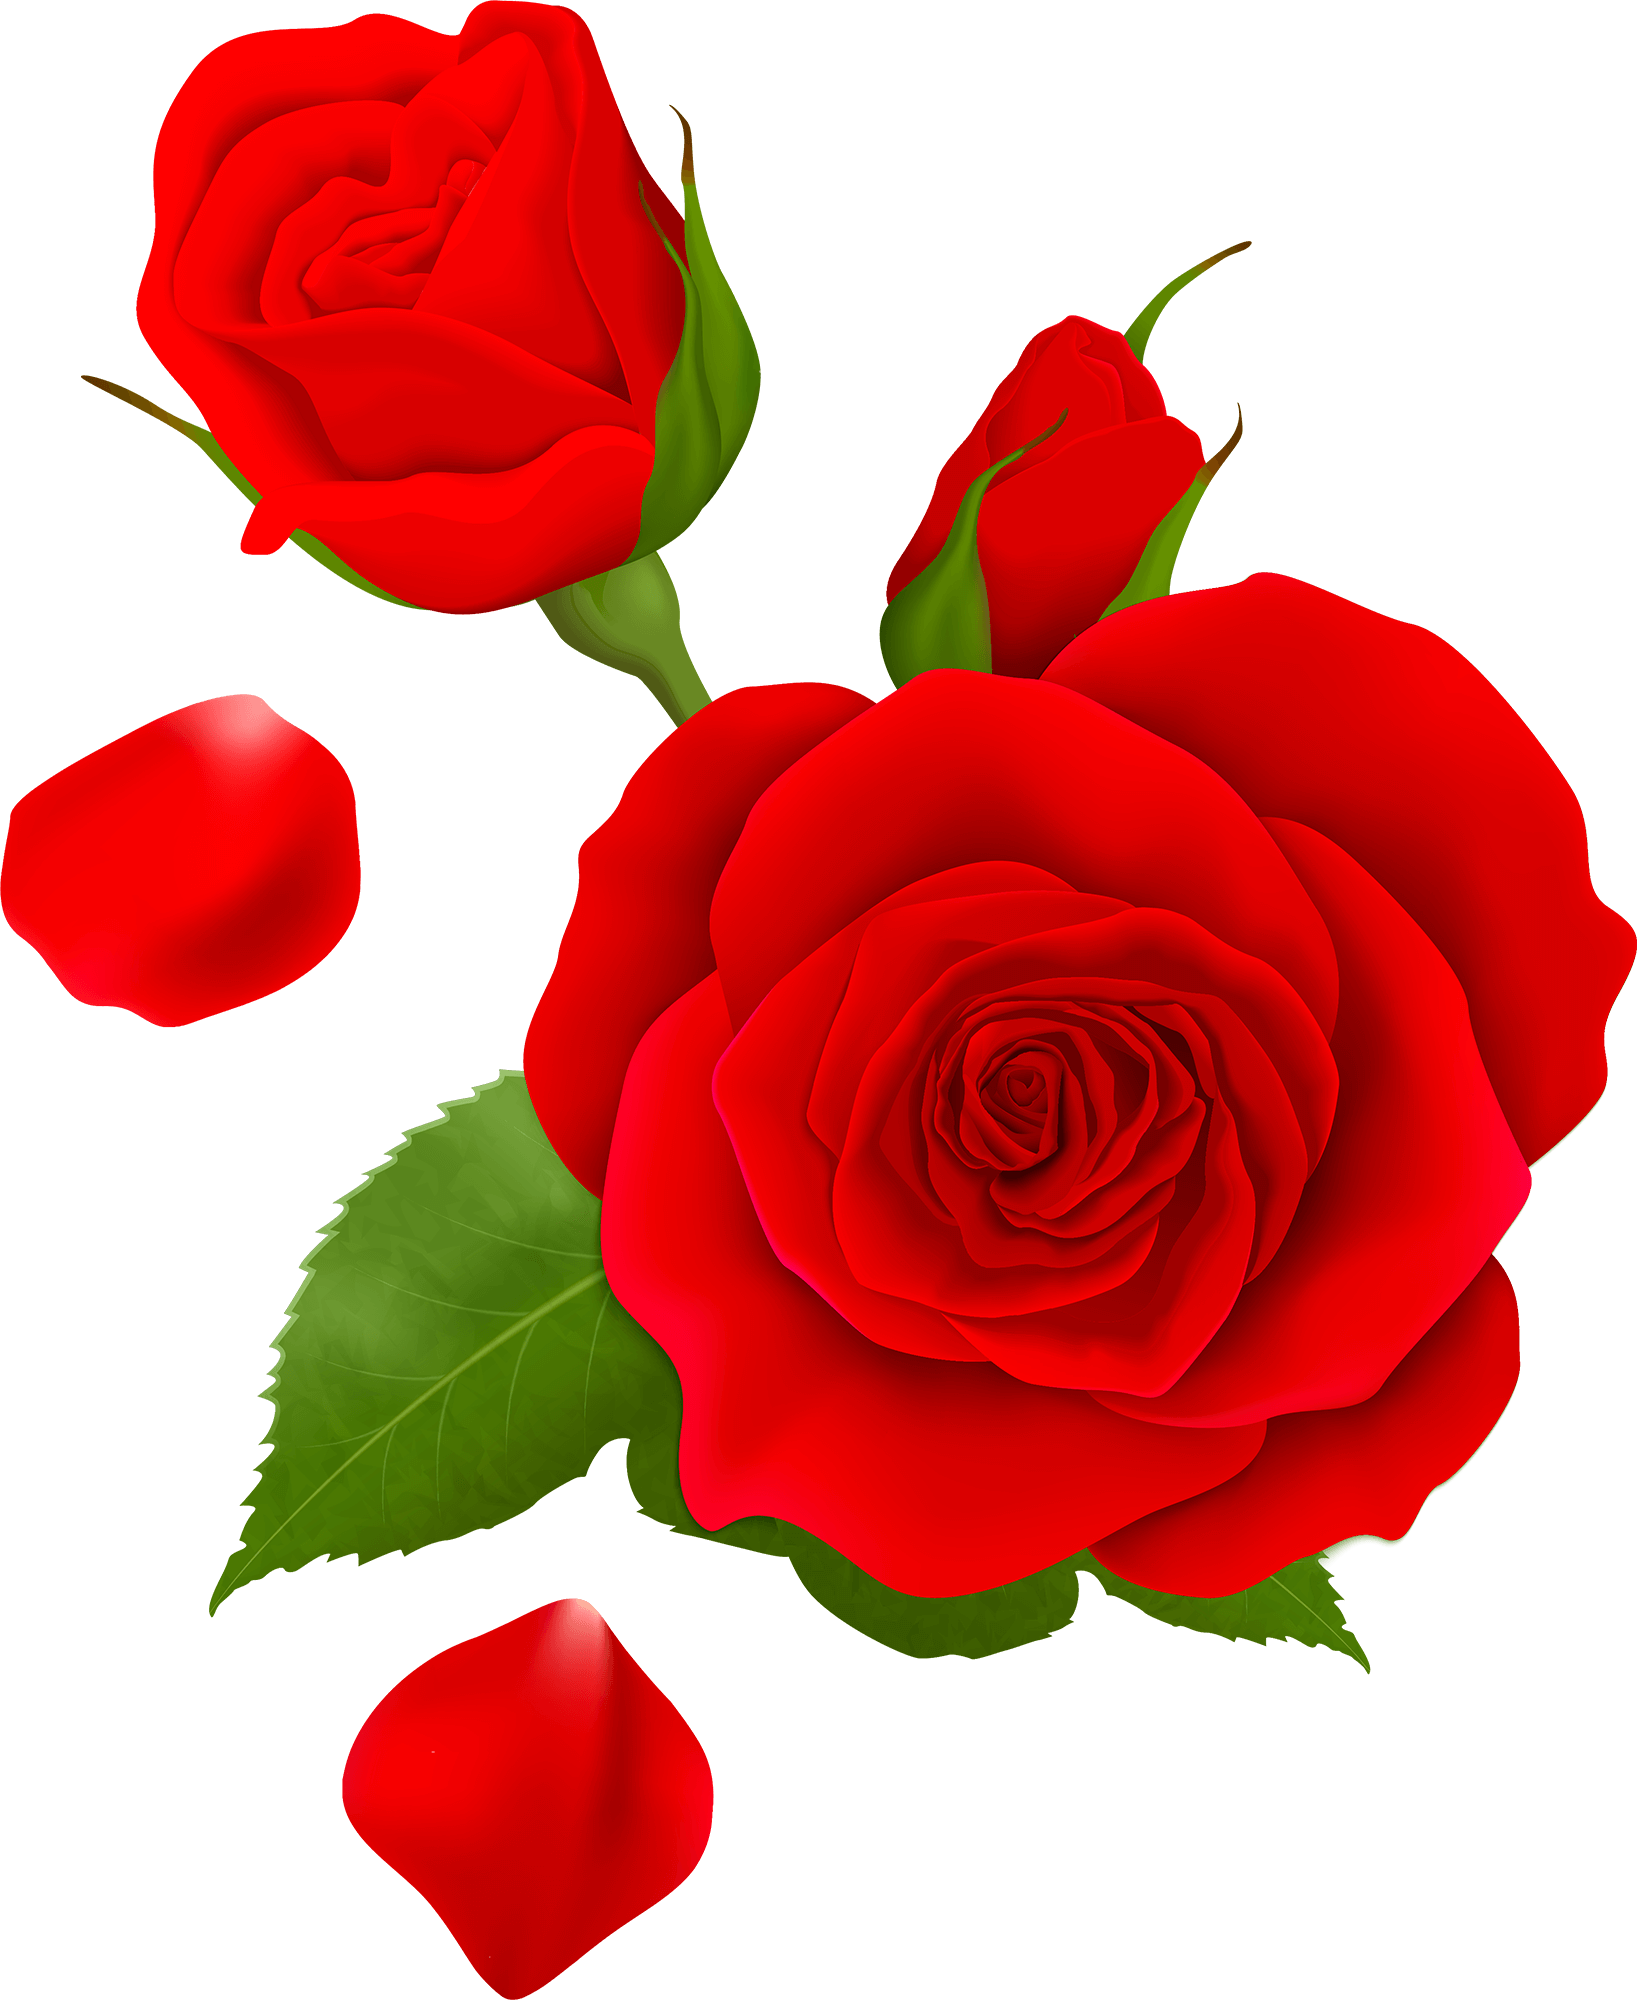 Rose Flower Rose Day PNG - Rose Image Download Free